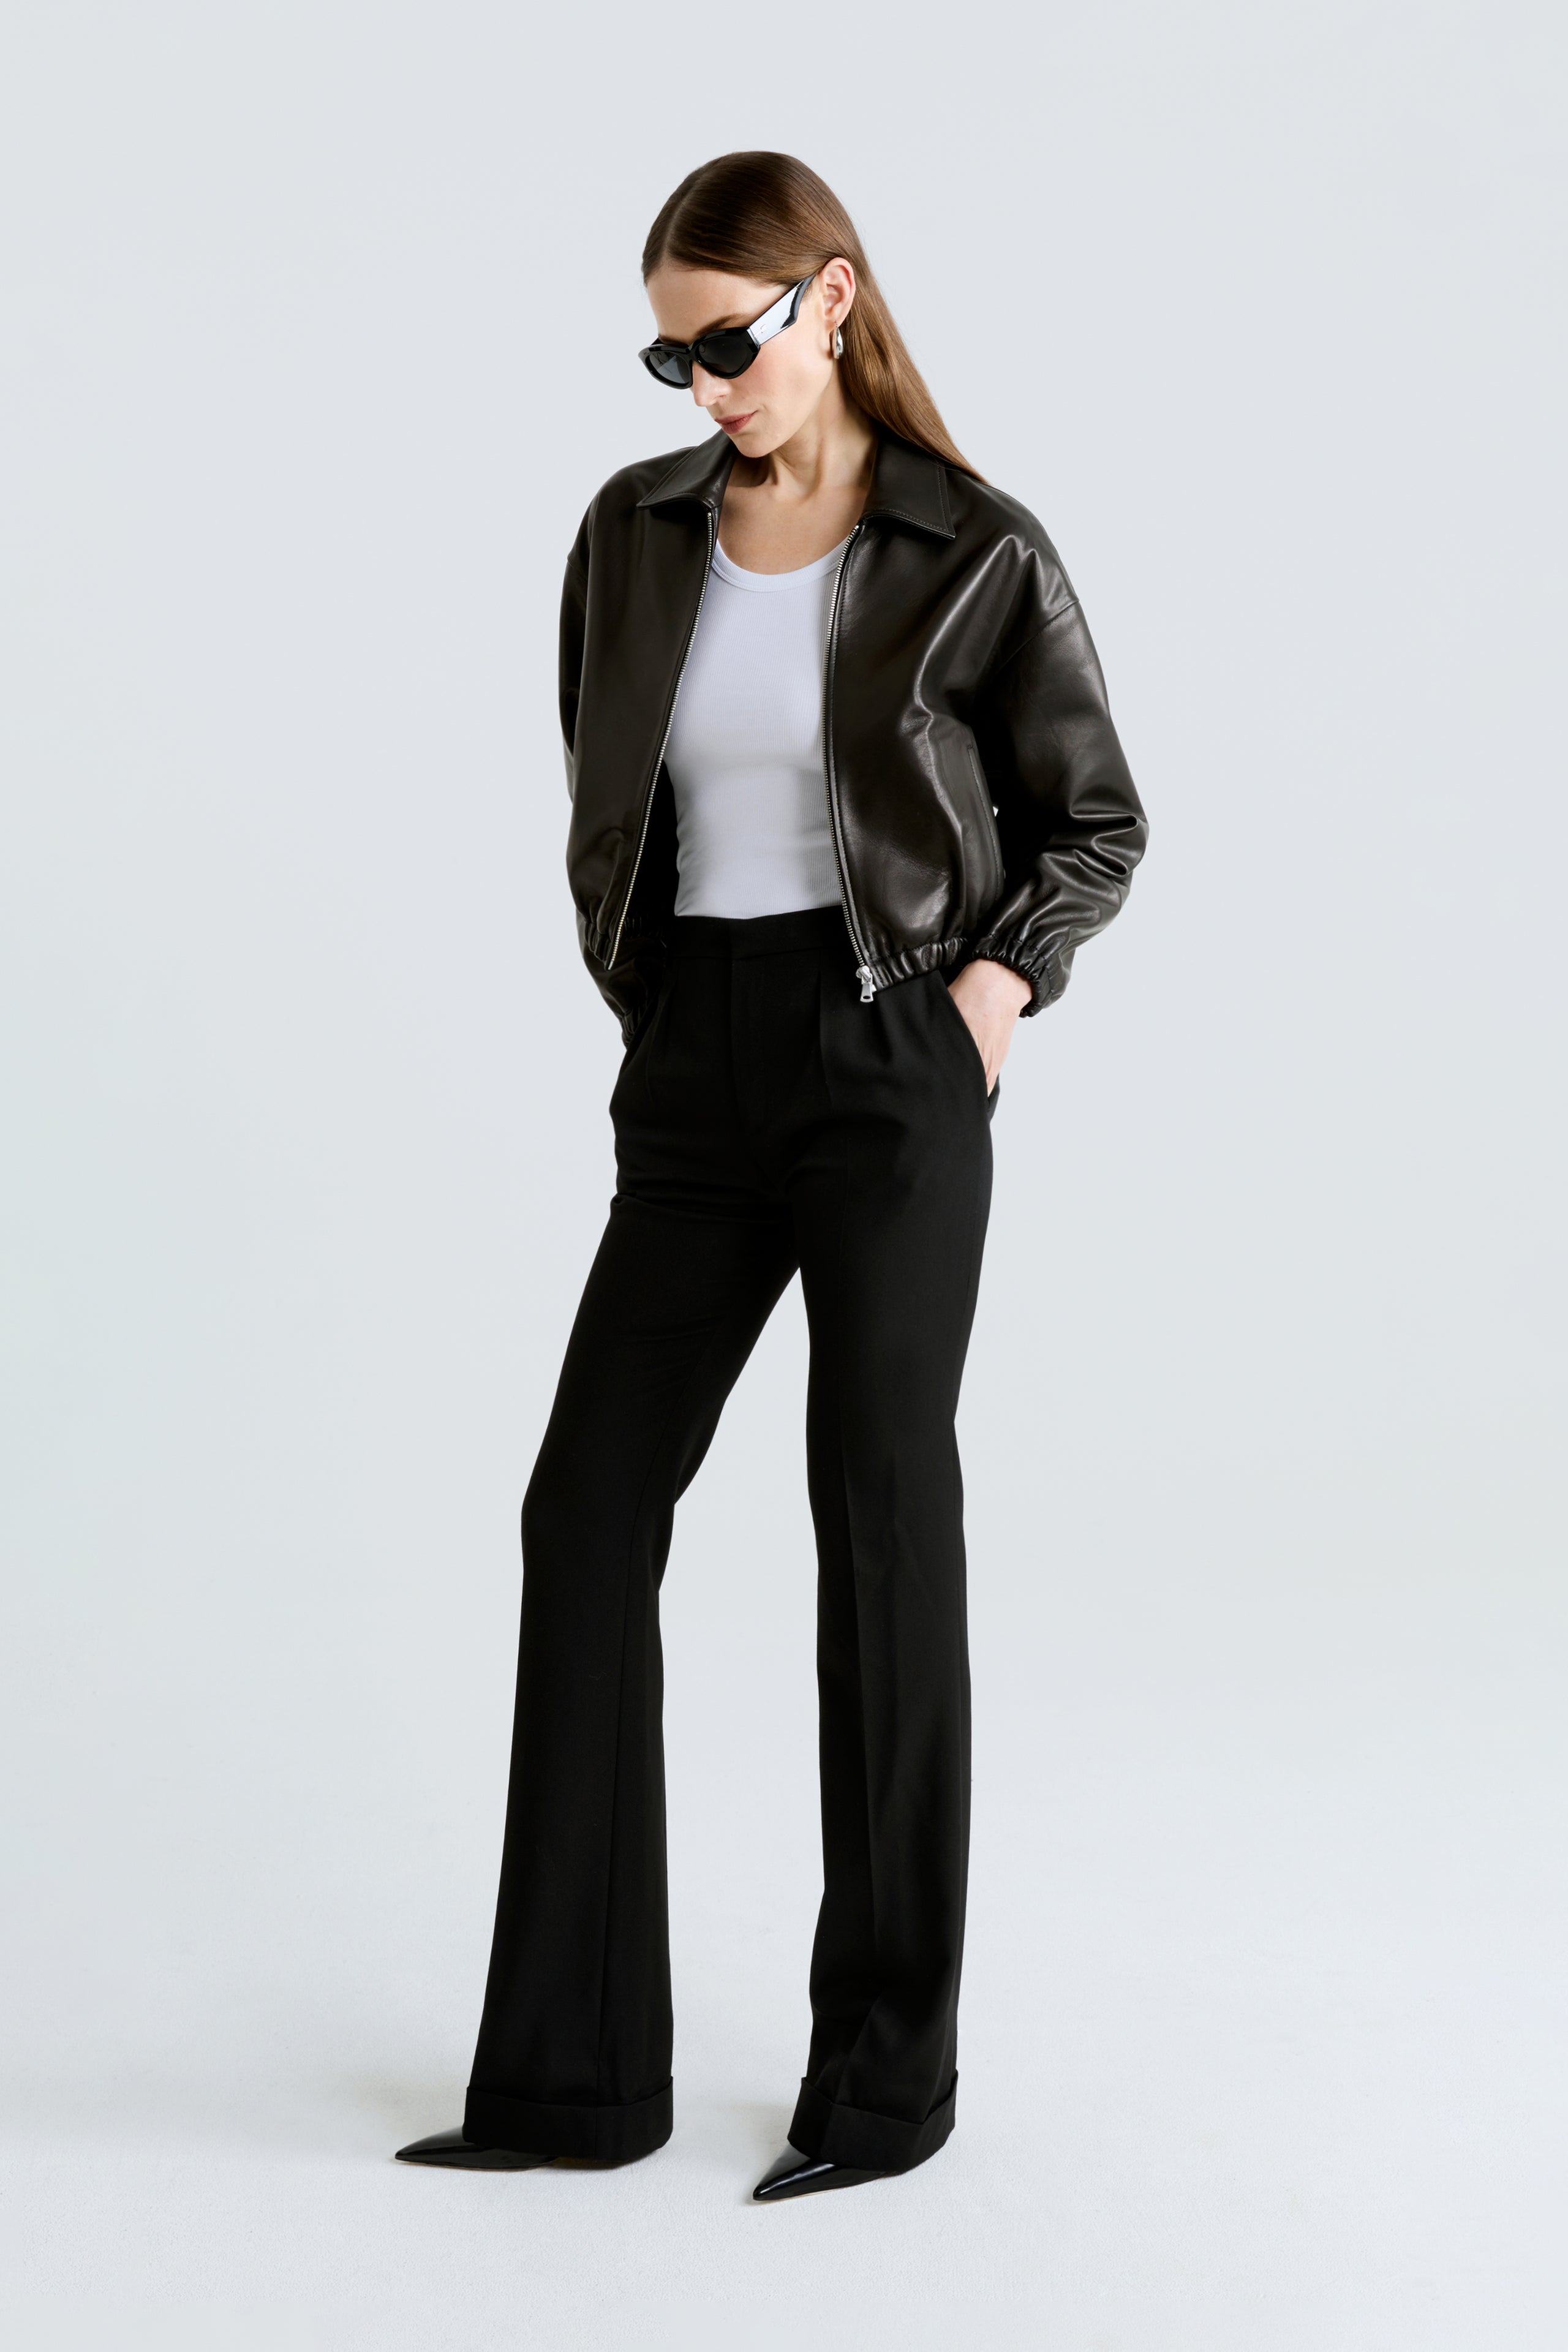 Model is wearing the Nour Hammour Luna Black Bomber Leather Jacket Side